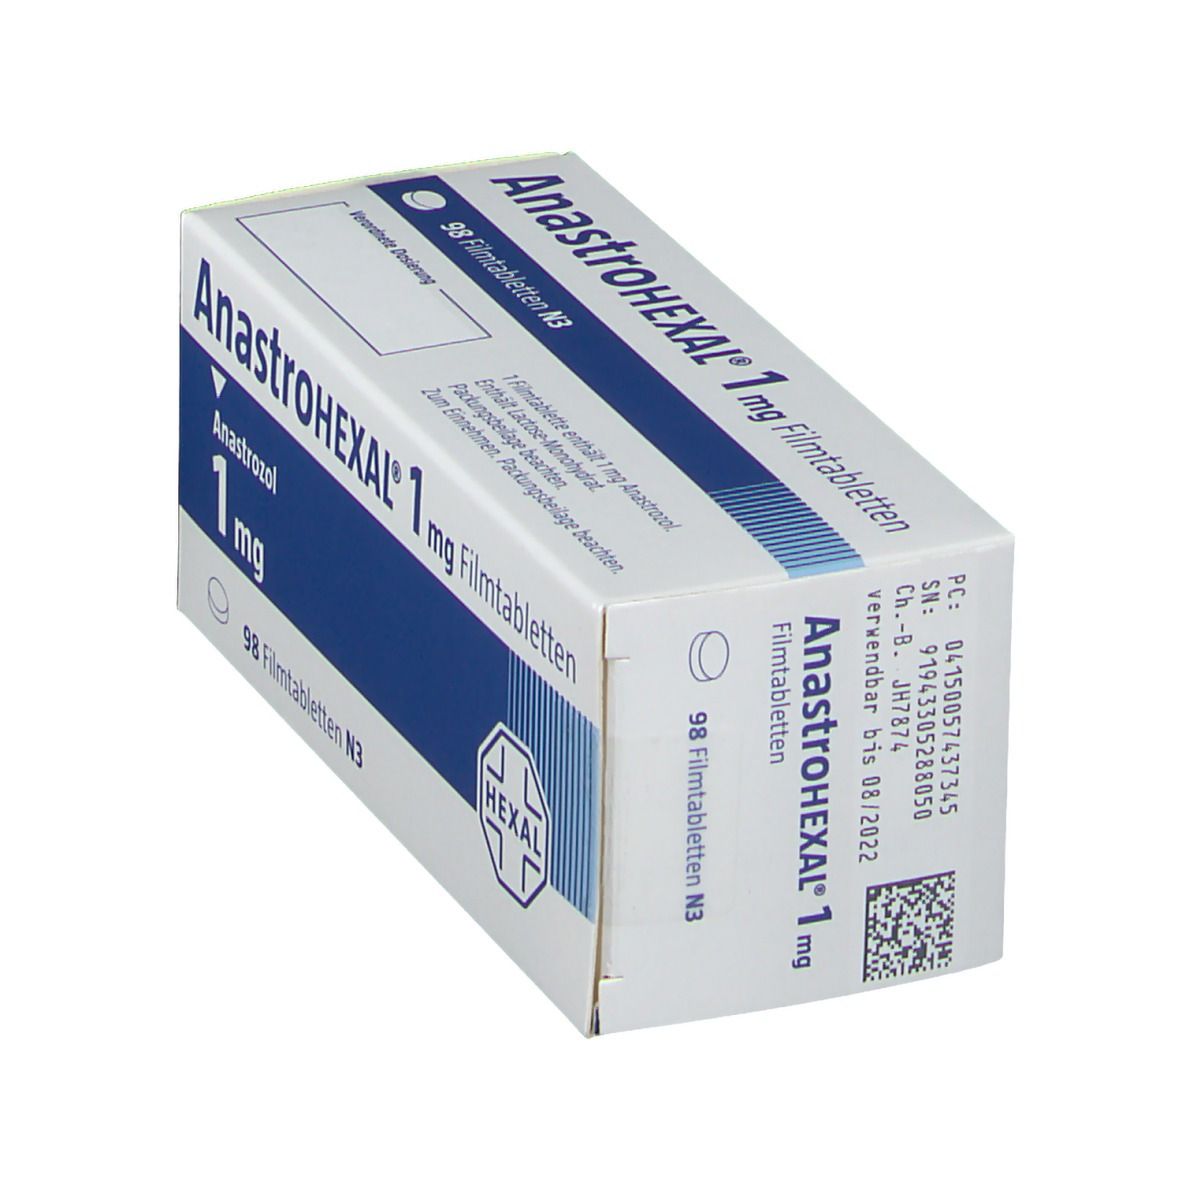 AnastroHEXAL® 1 mg